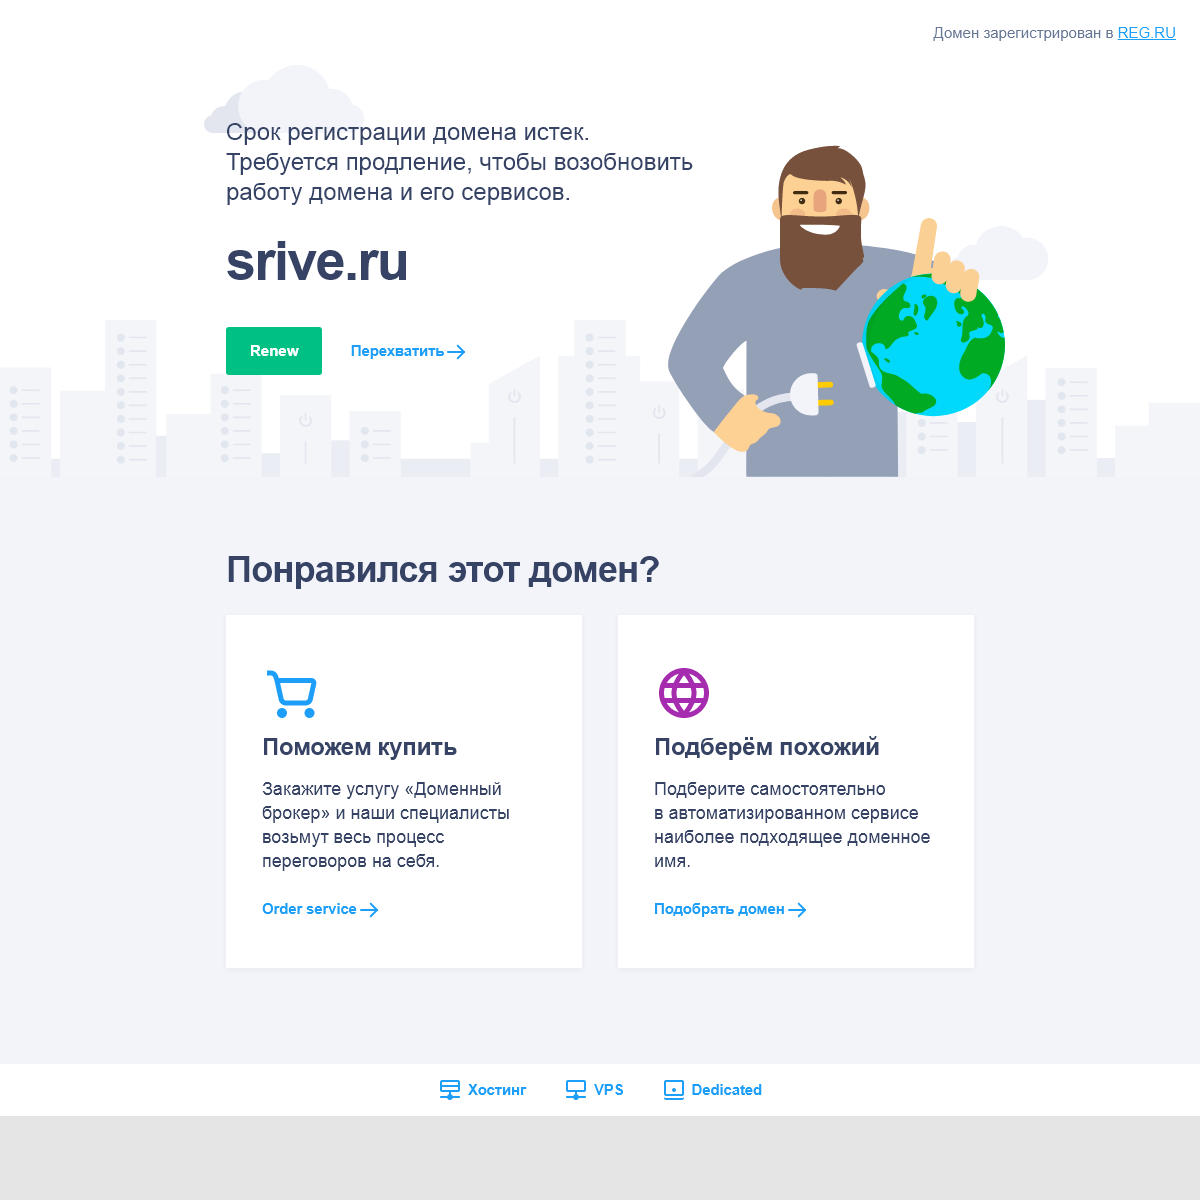 A complete backup of srive.ru